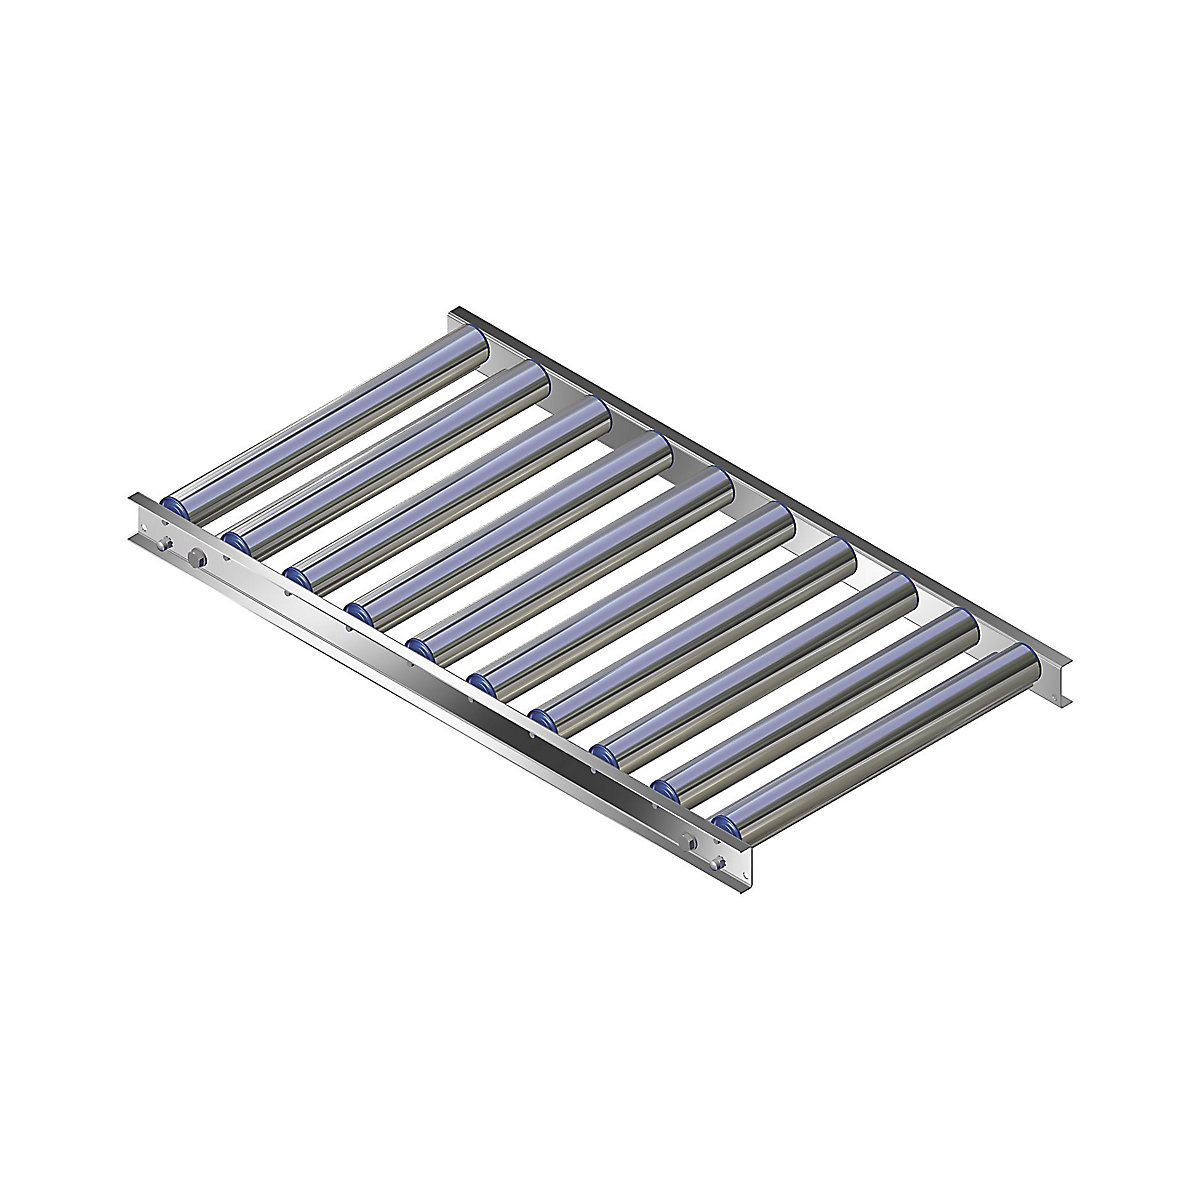 Gura – Light duty roller conveyor, aluminium frame with aluminium rollers